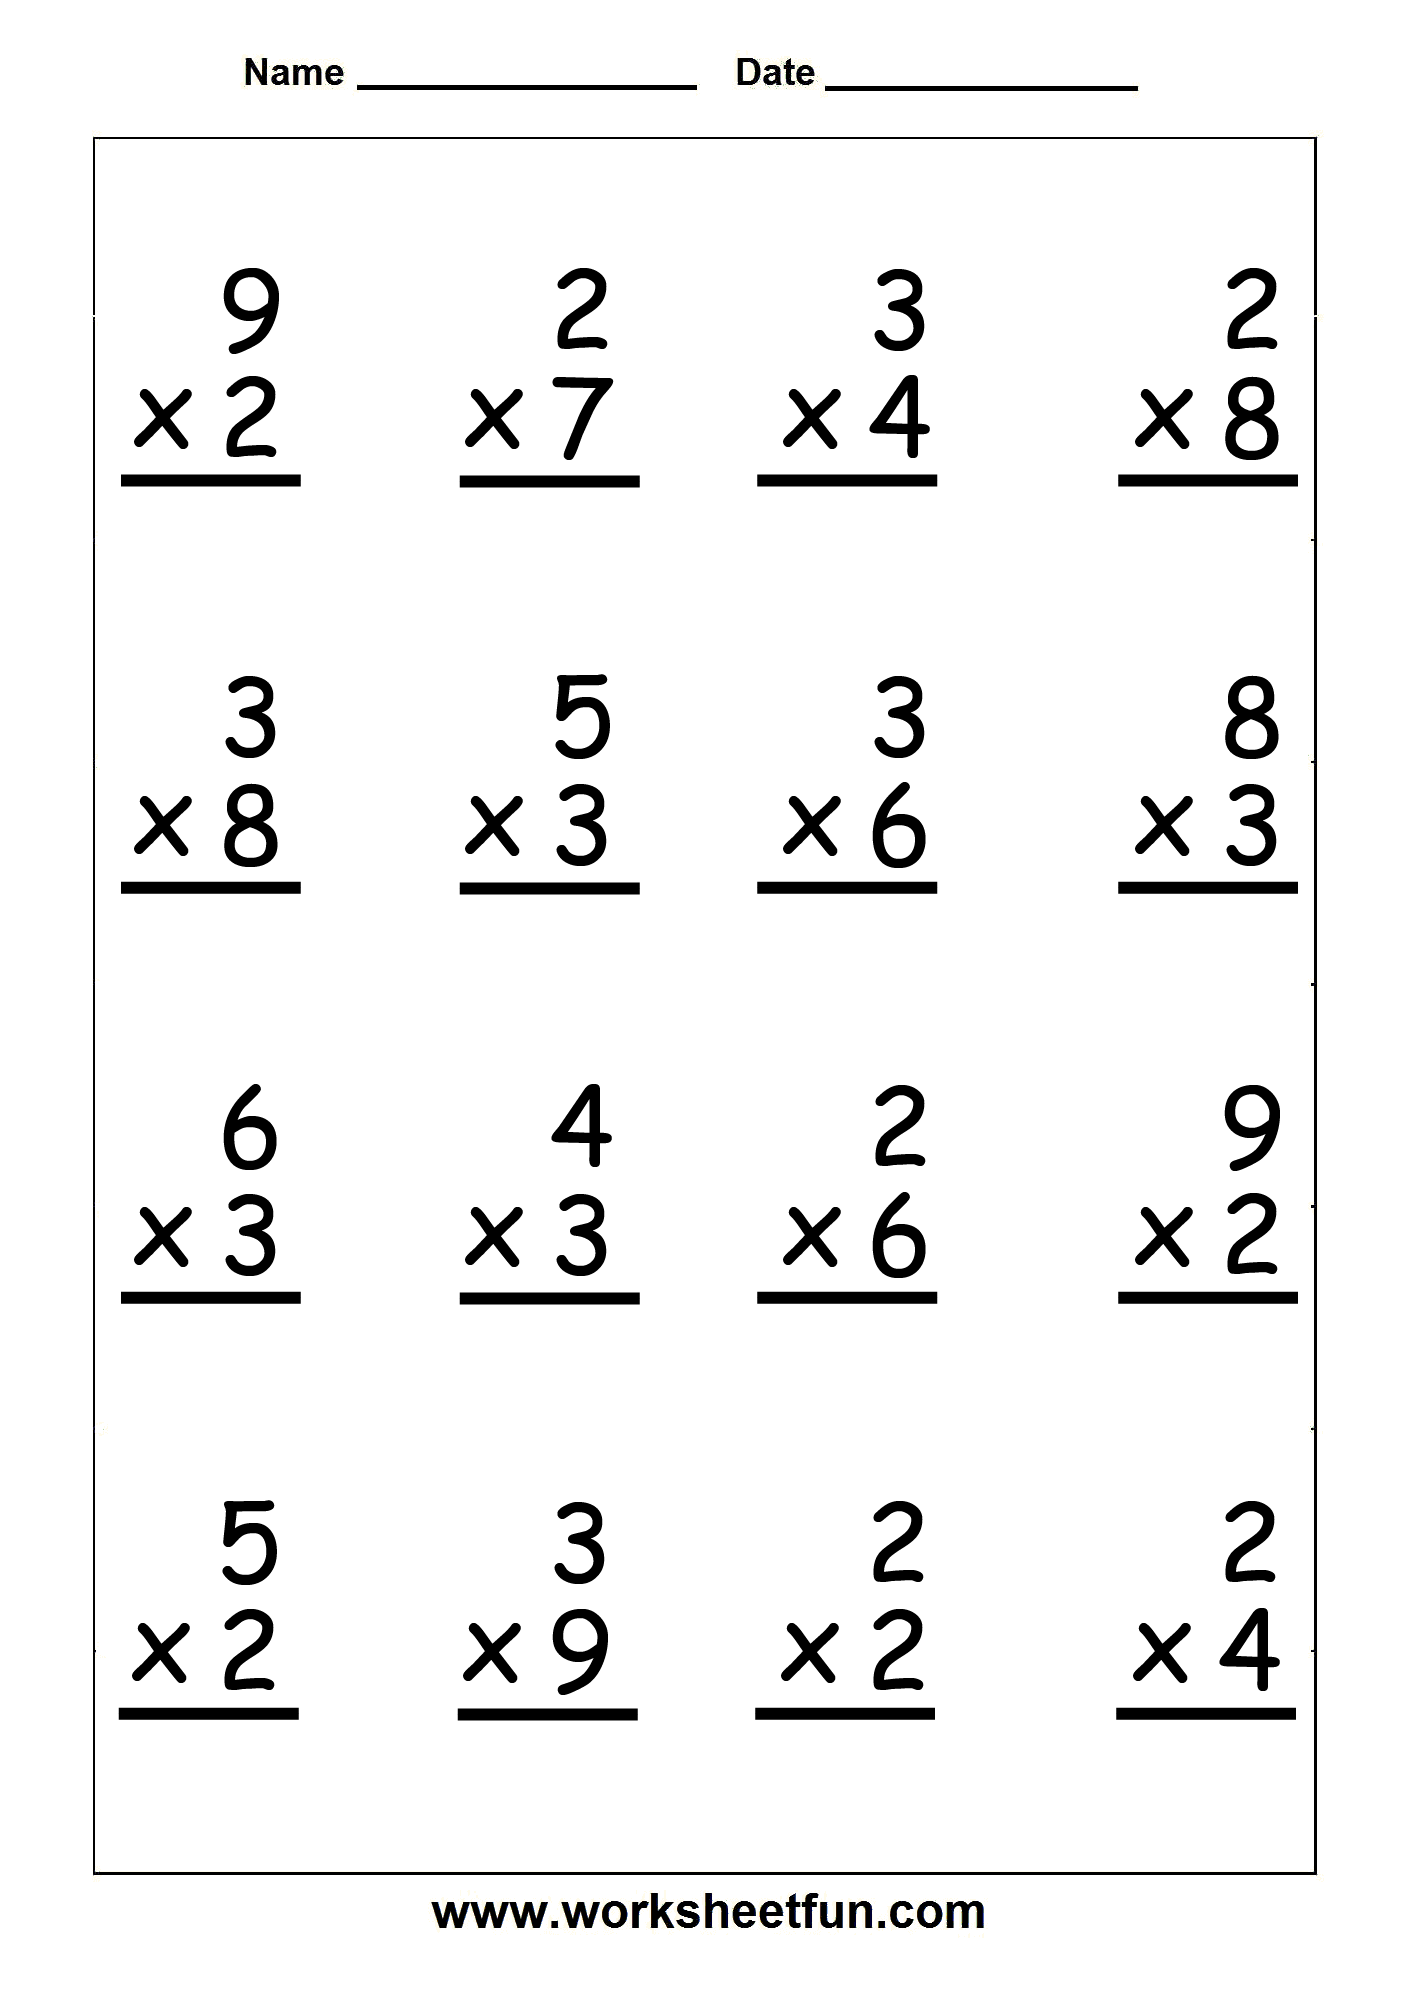 printable-3rd-grade-math-worksheets-multiplication-1-12-math-worksheets-printable